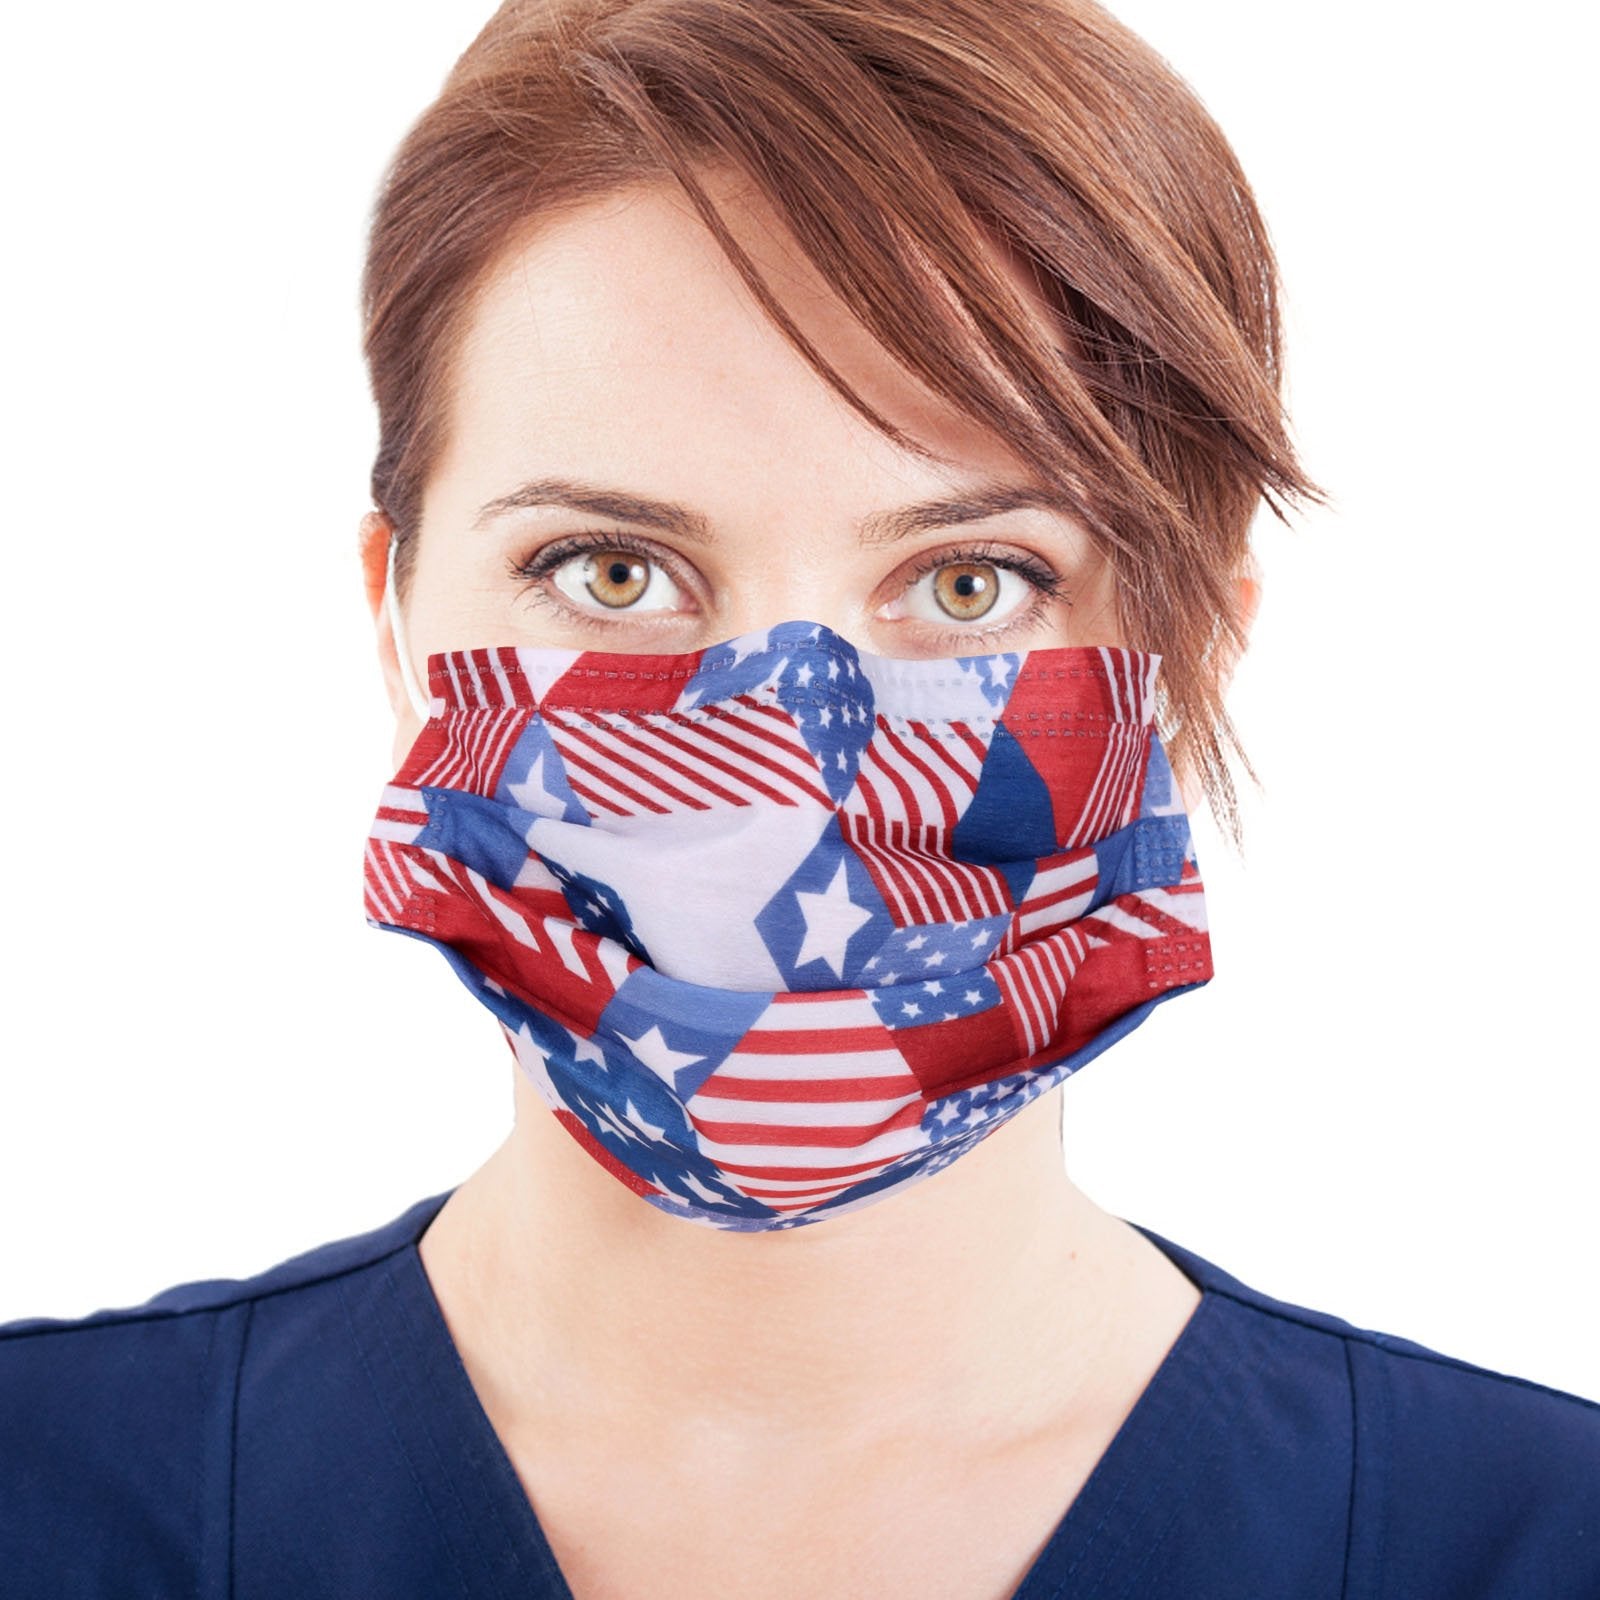 20Pcs  American Bling 20PCS/Box  American Flag Colors Print Disposable Face Masks 3 Layers Face Masks